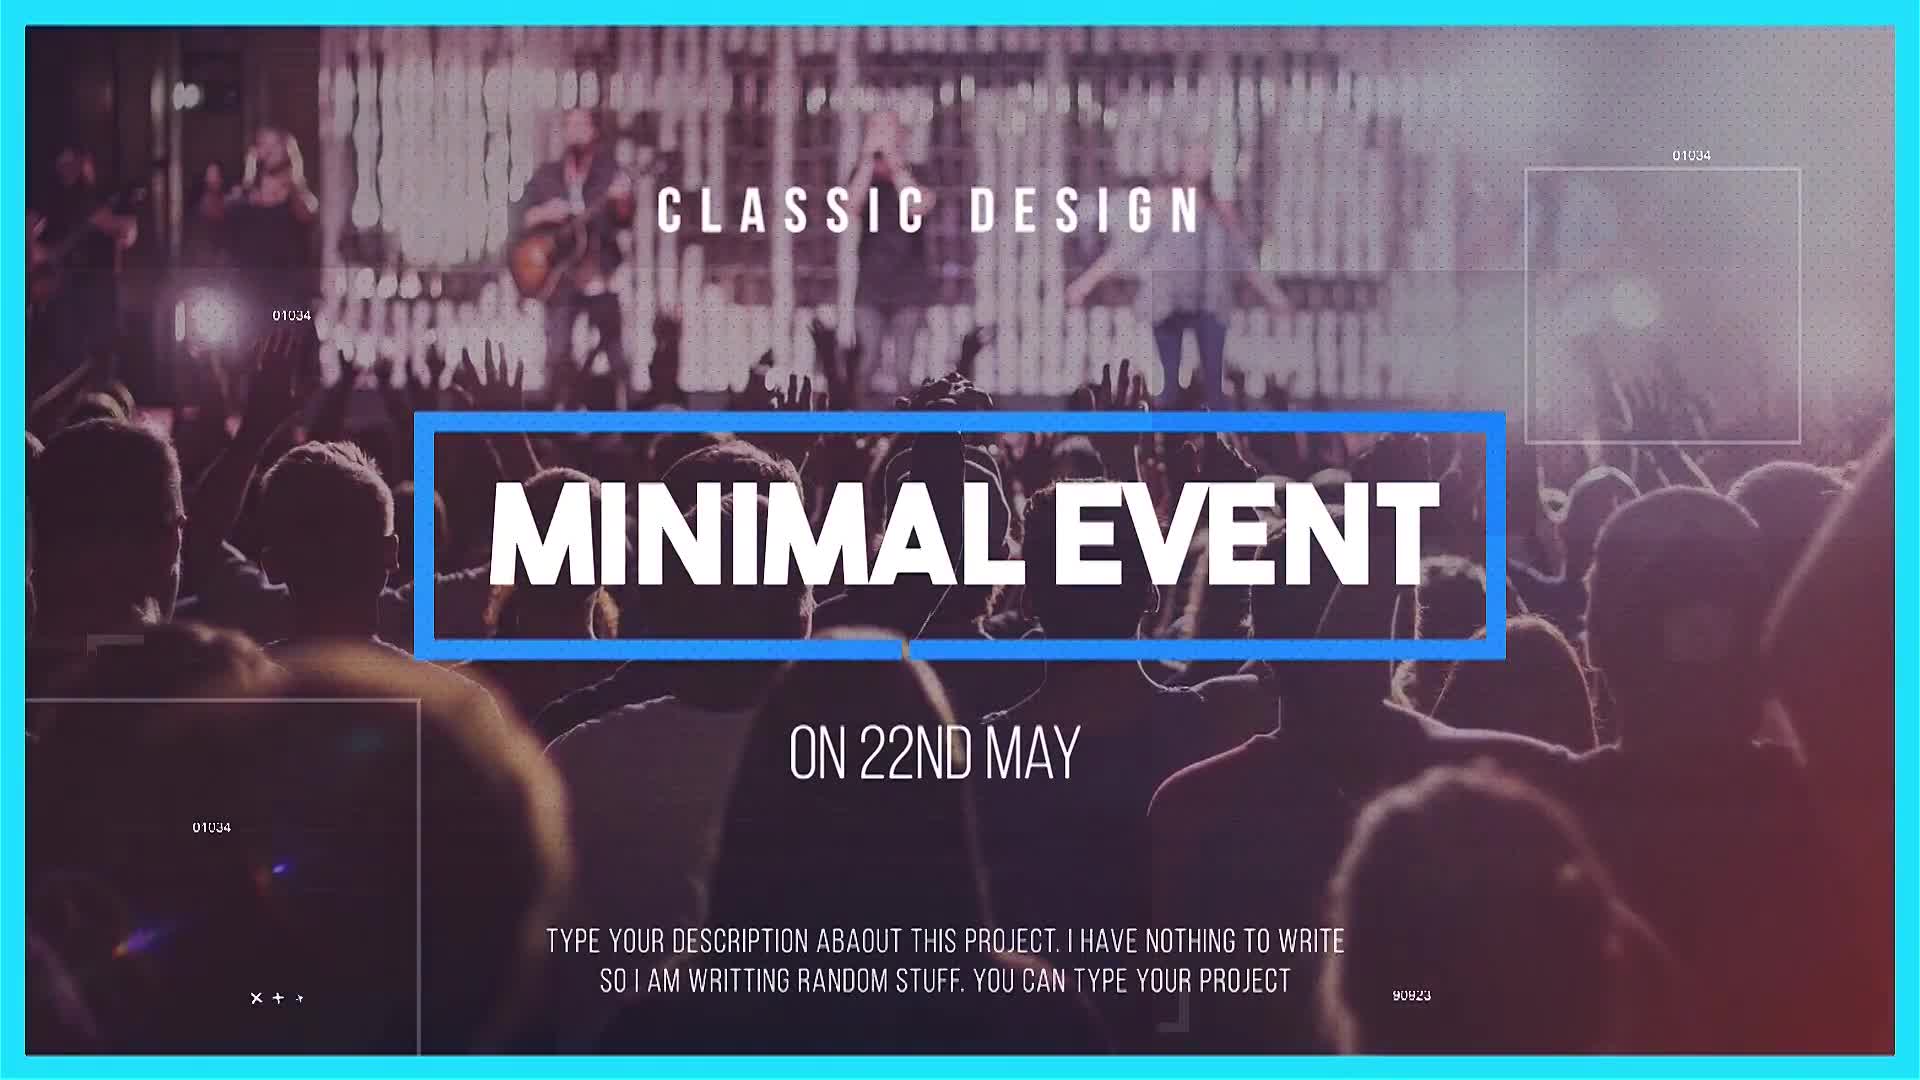 Minimal Event - Download Videohive 22317233